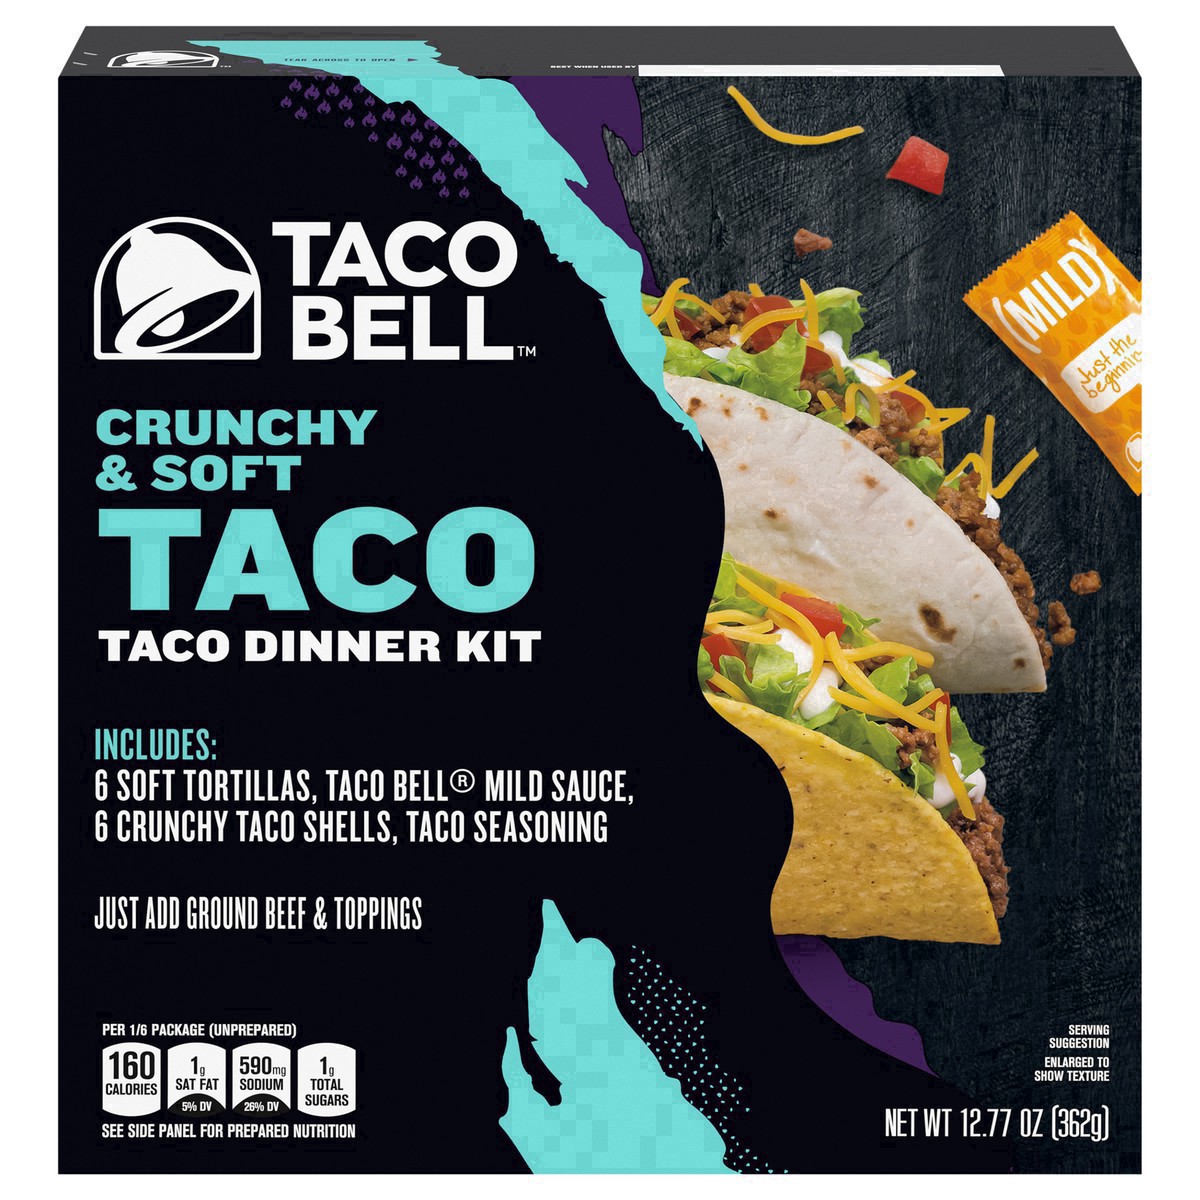 slide 97 of 101, Taco Bell Crunchy & Soft Taco Cravings Kit with 6 Soft Tortillas, 6 Crunchy Taco Shells, Taco Bell Mild Sauce & Seasoning, 12.77 oz Box, 1 ea